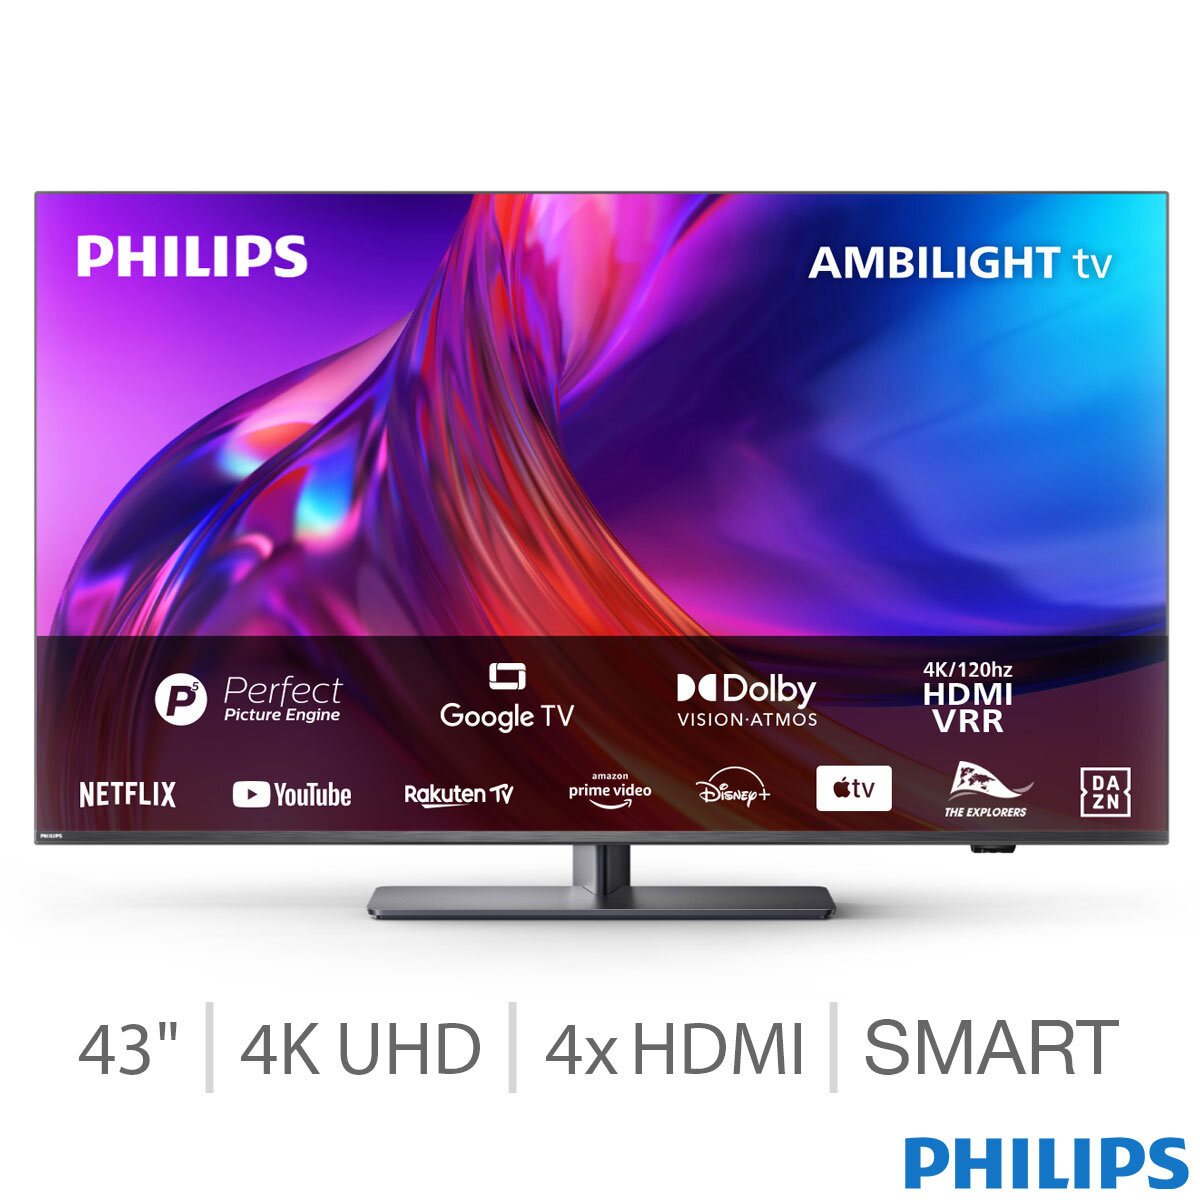 Philips 43PUS8808/12 The One 4K UHD 120Hz LED Ambilight TV